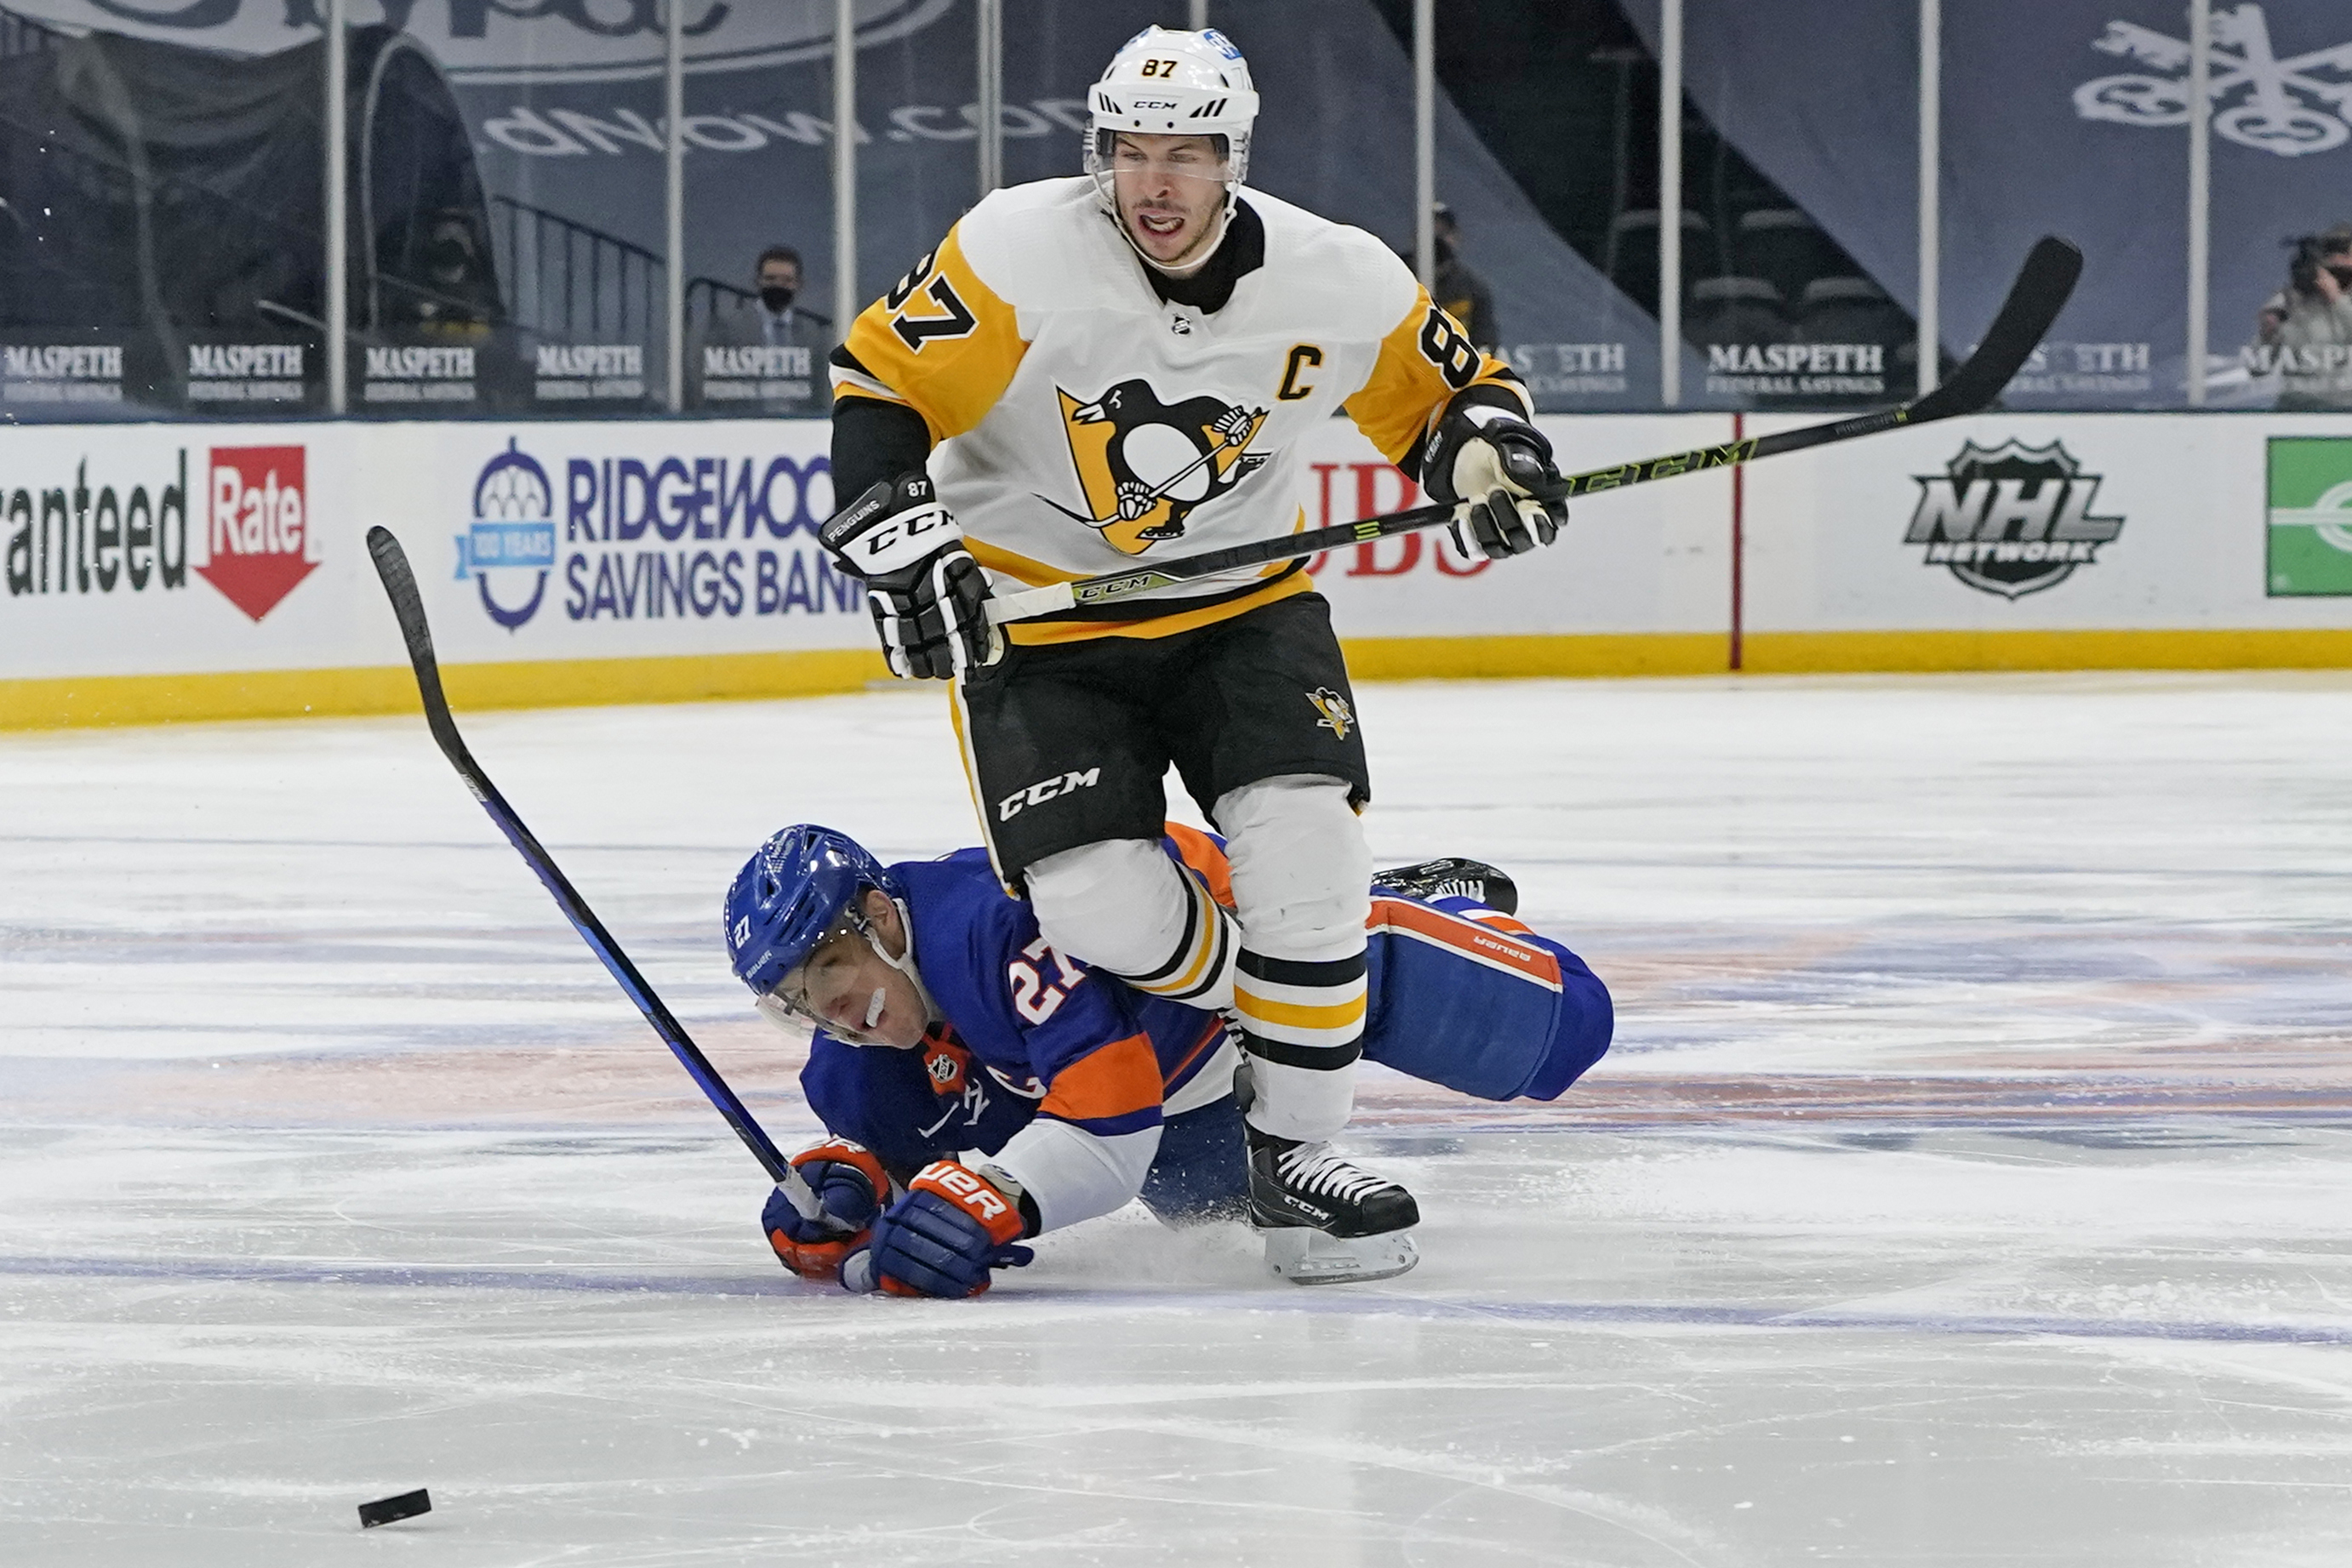 NHL Team Apparel NEW Sidney Crosby 87 Pittsburgh Penguins MENS